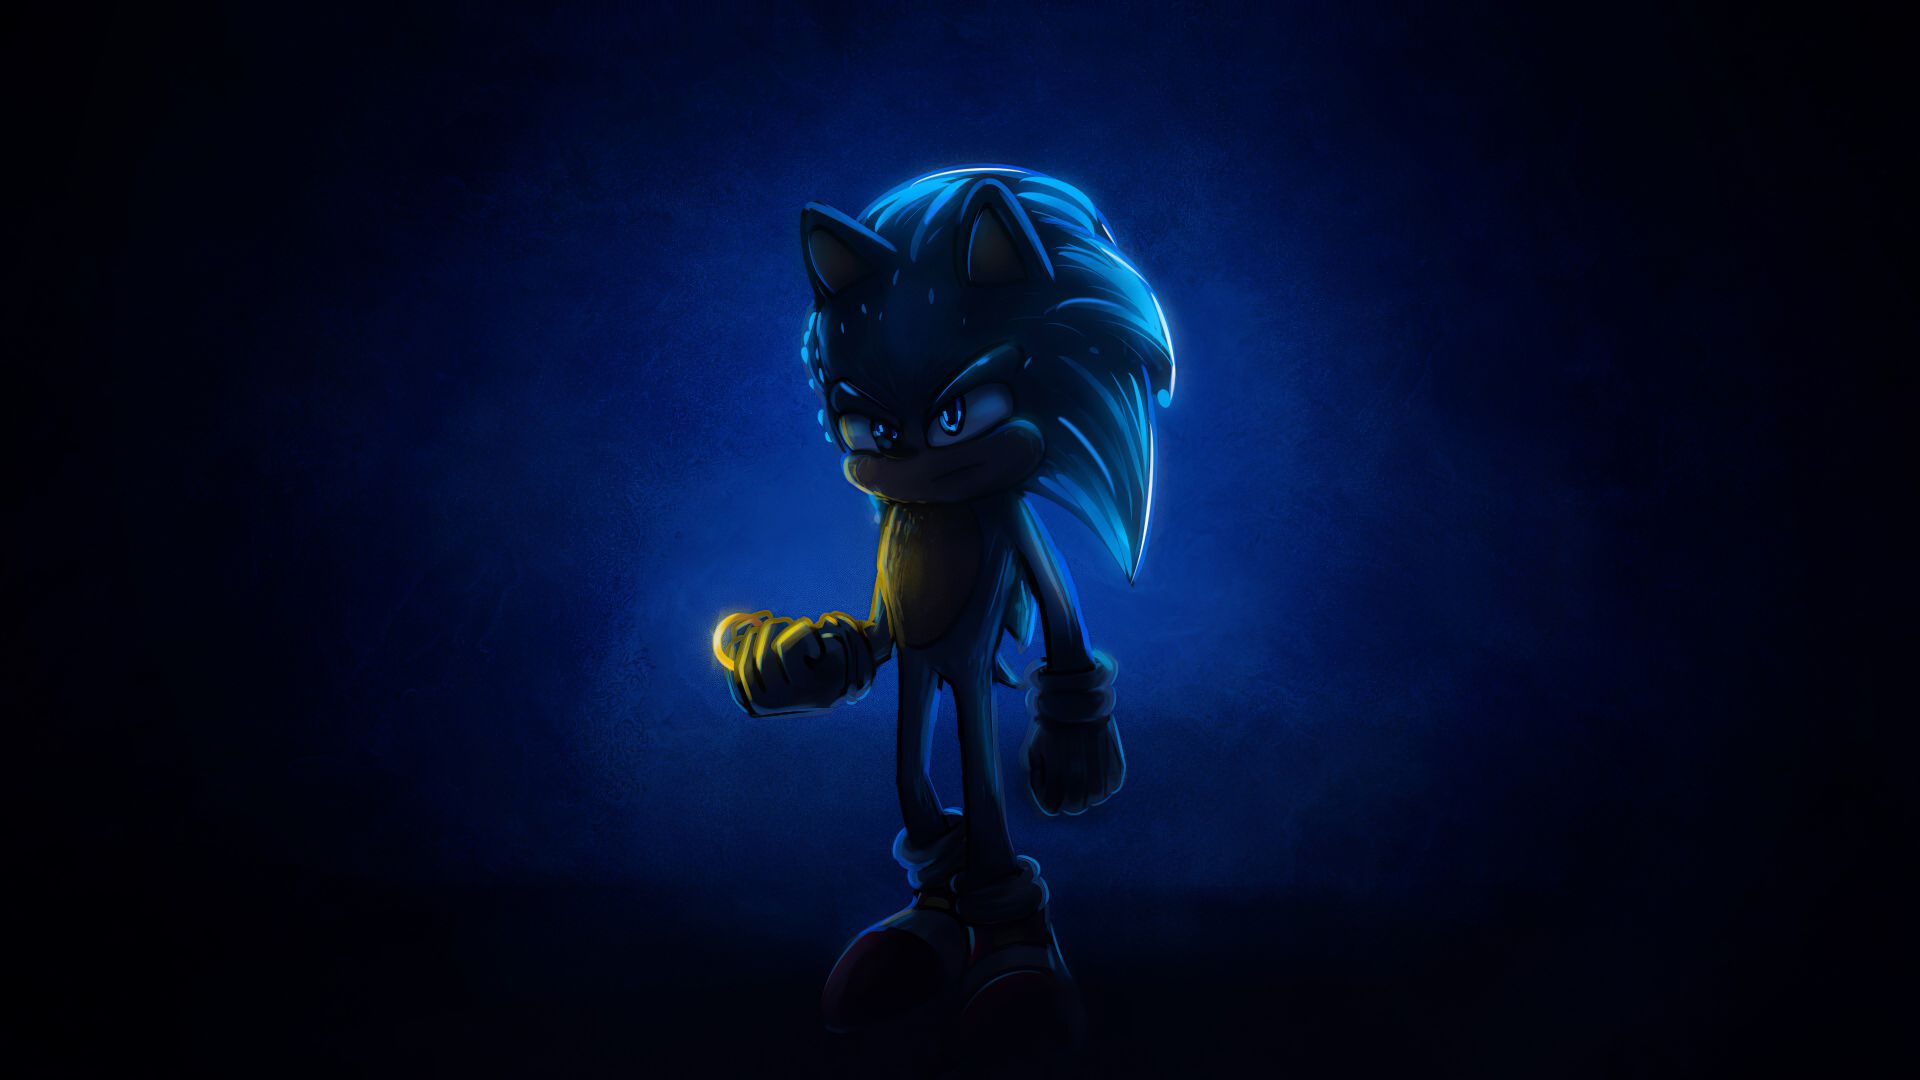 Desktop Wallpaper Sonic The Hedgehog, 2020 Movie, Artwork, Hd Image,  Picture, Background, A26950